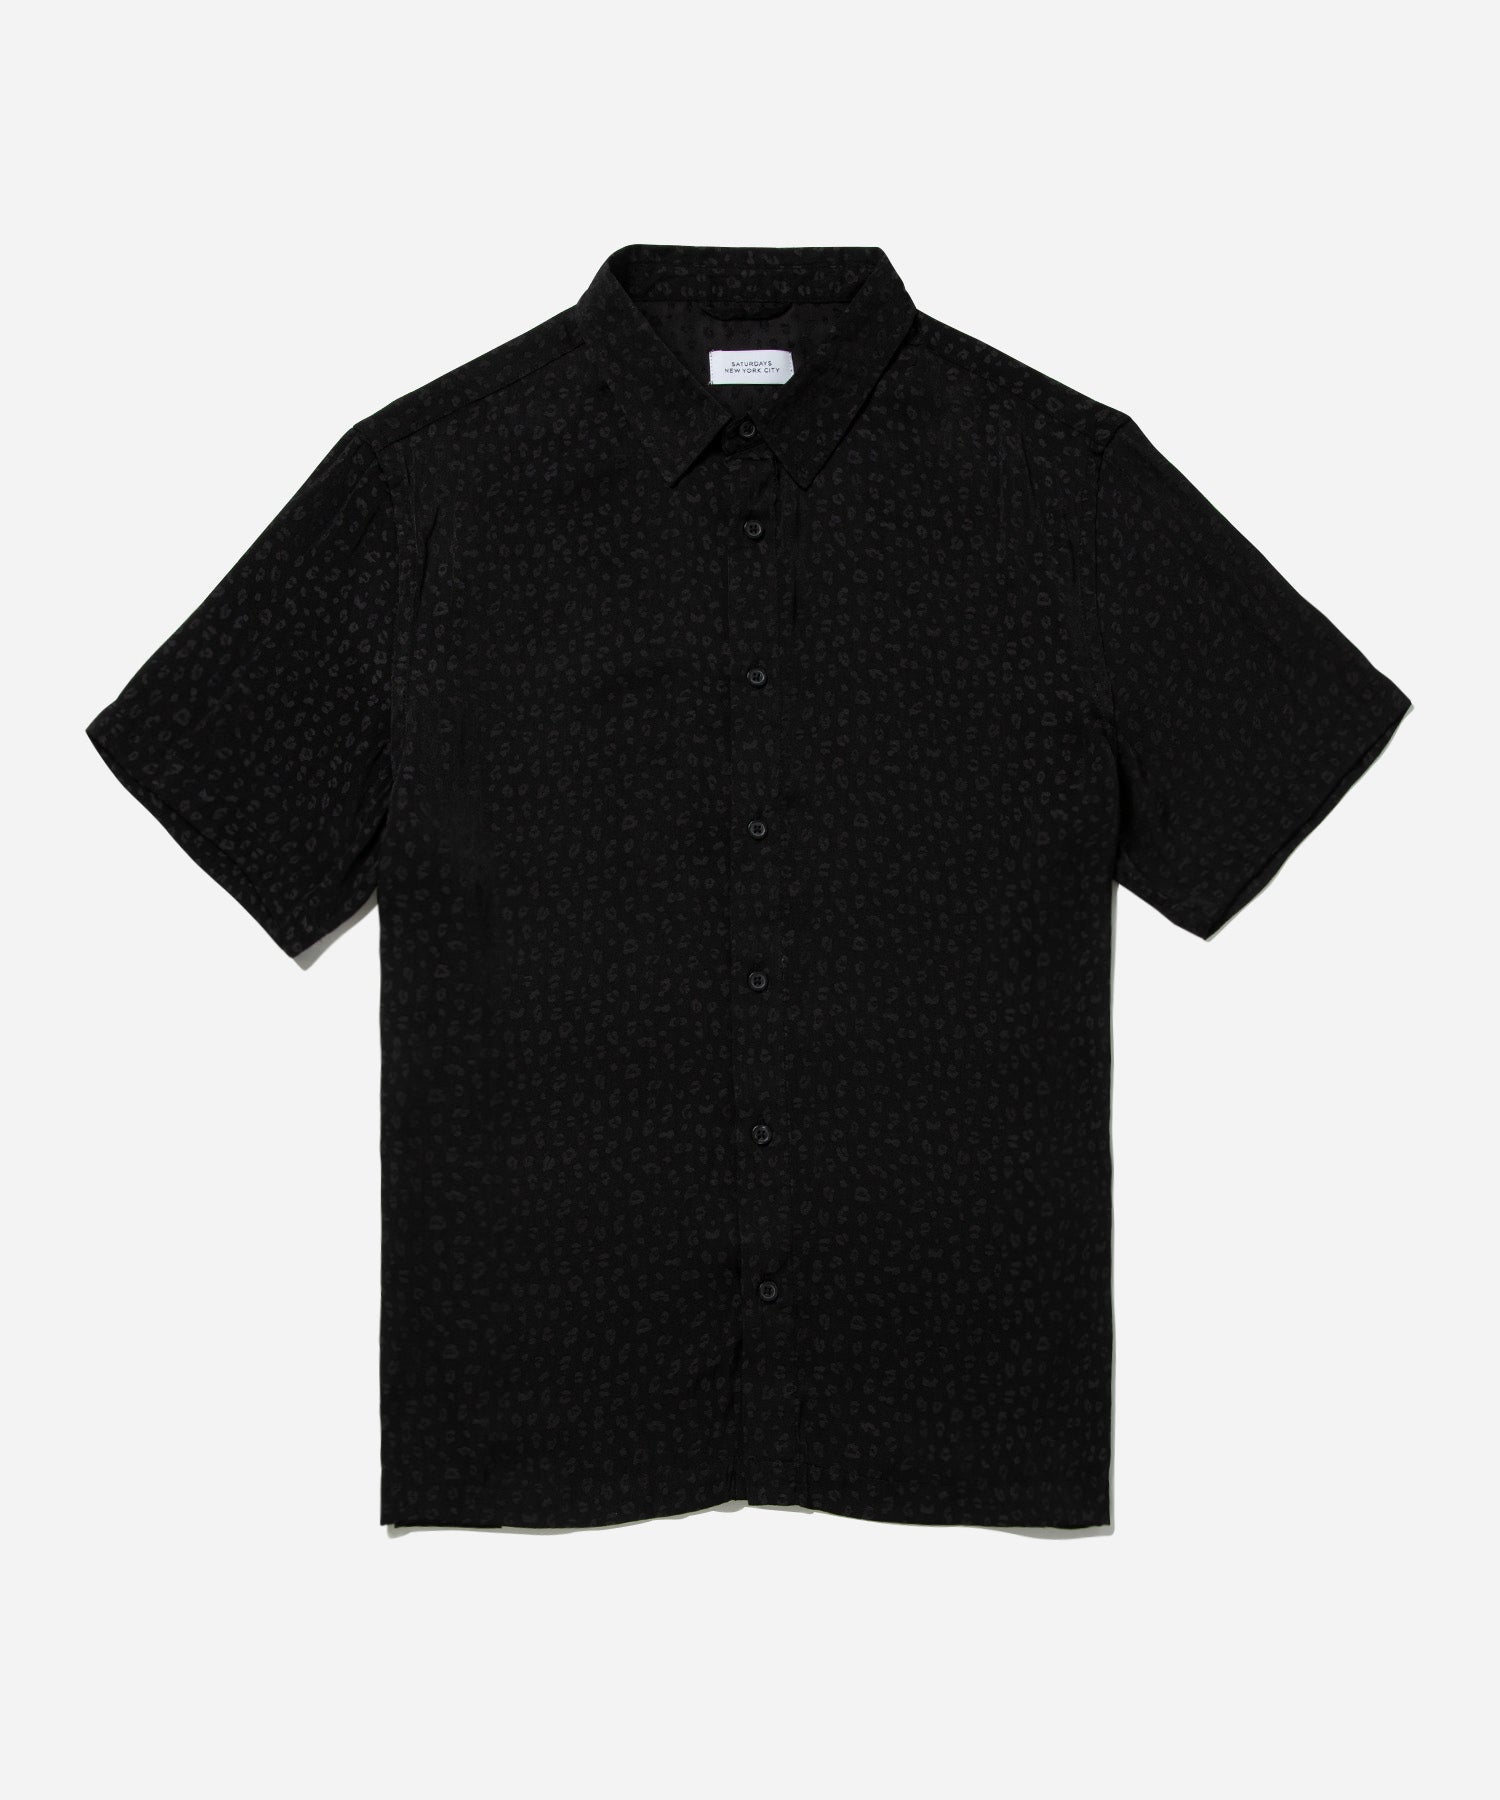 Balance Collection Stripes Black Short Sleeve T-Shirt Size M - 68